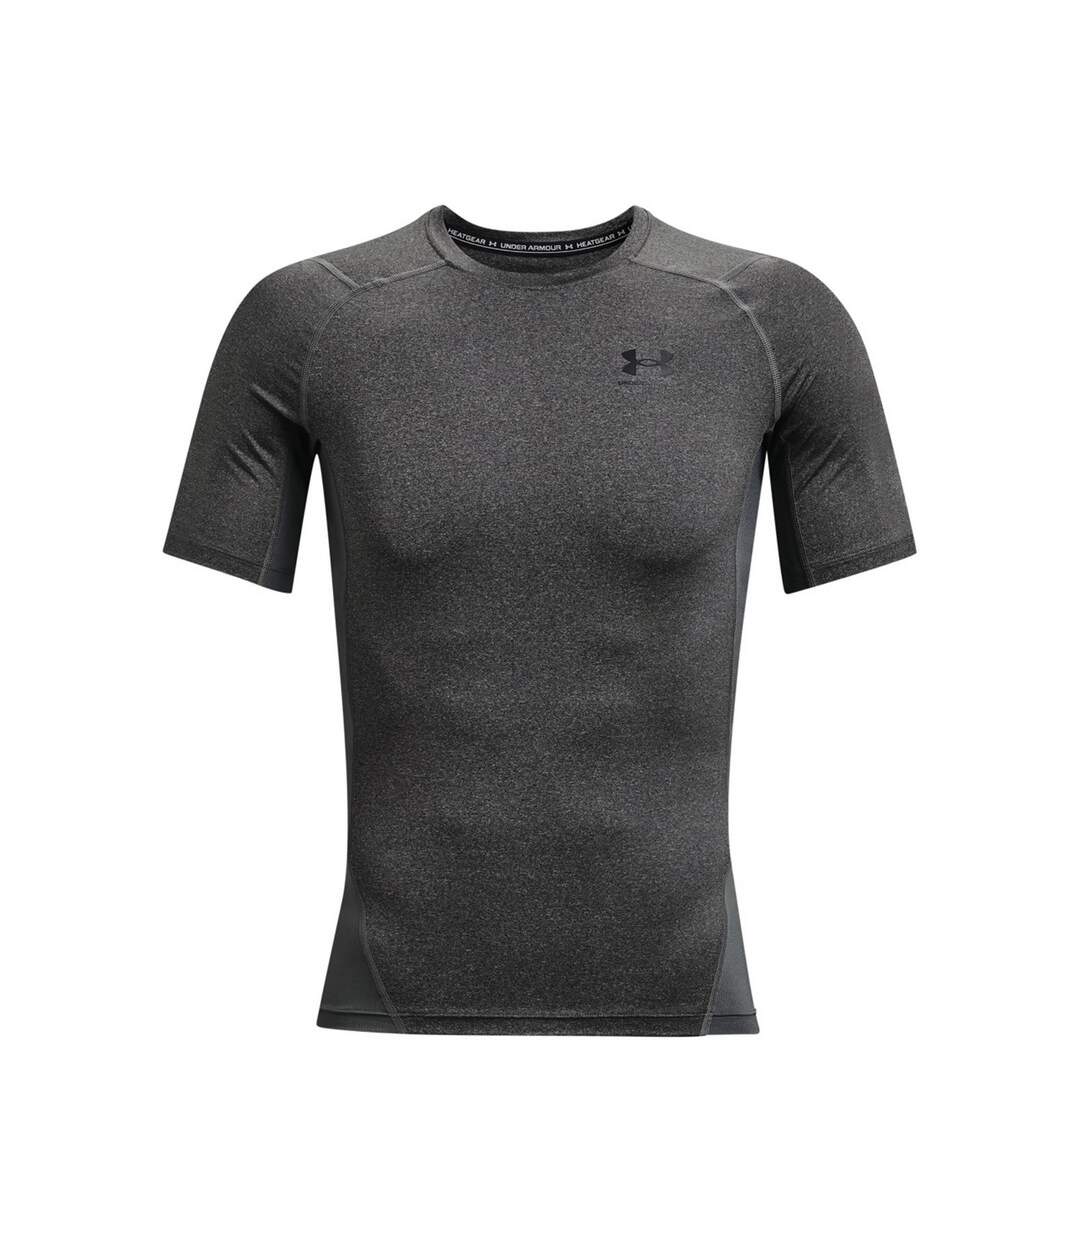 Under Armour Mens Short-Sleeved Compression Shirt (Carbon Heather/Black)